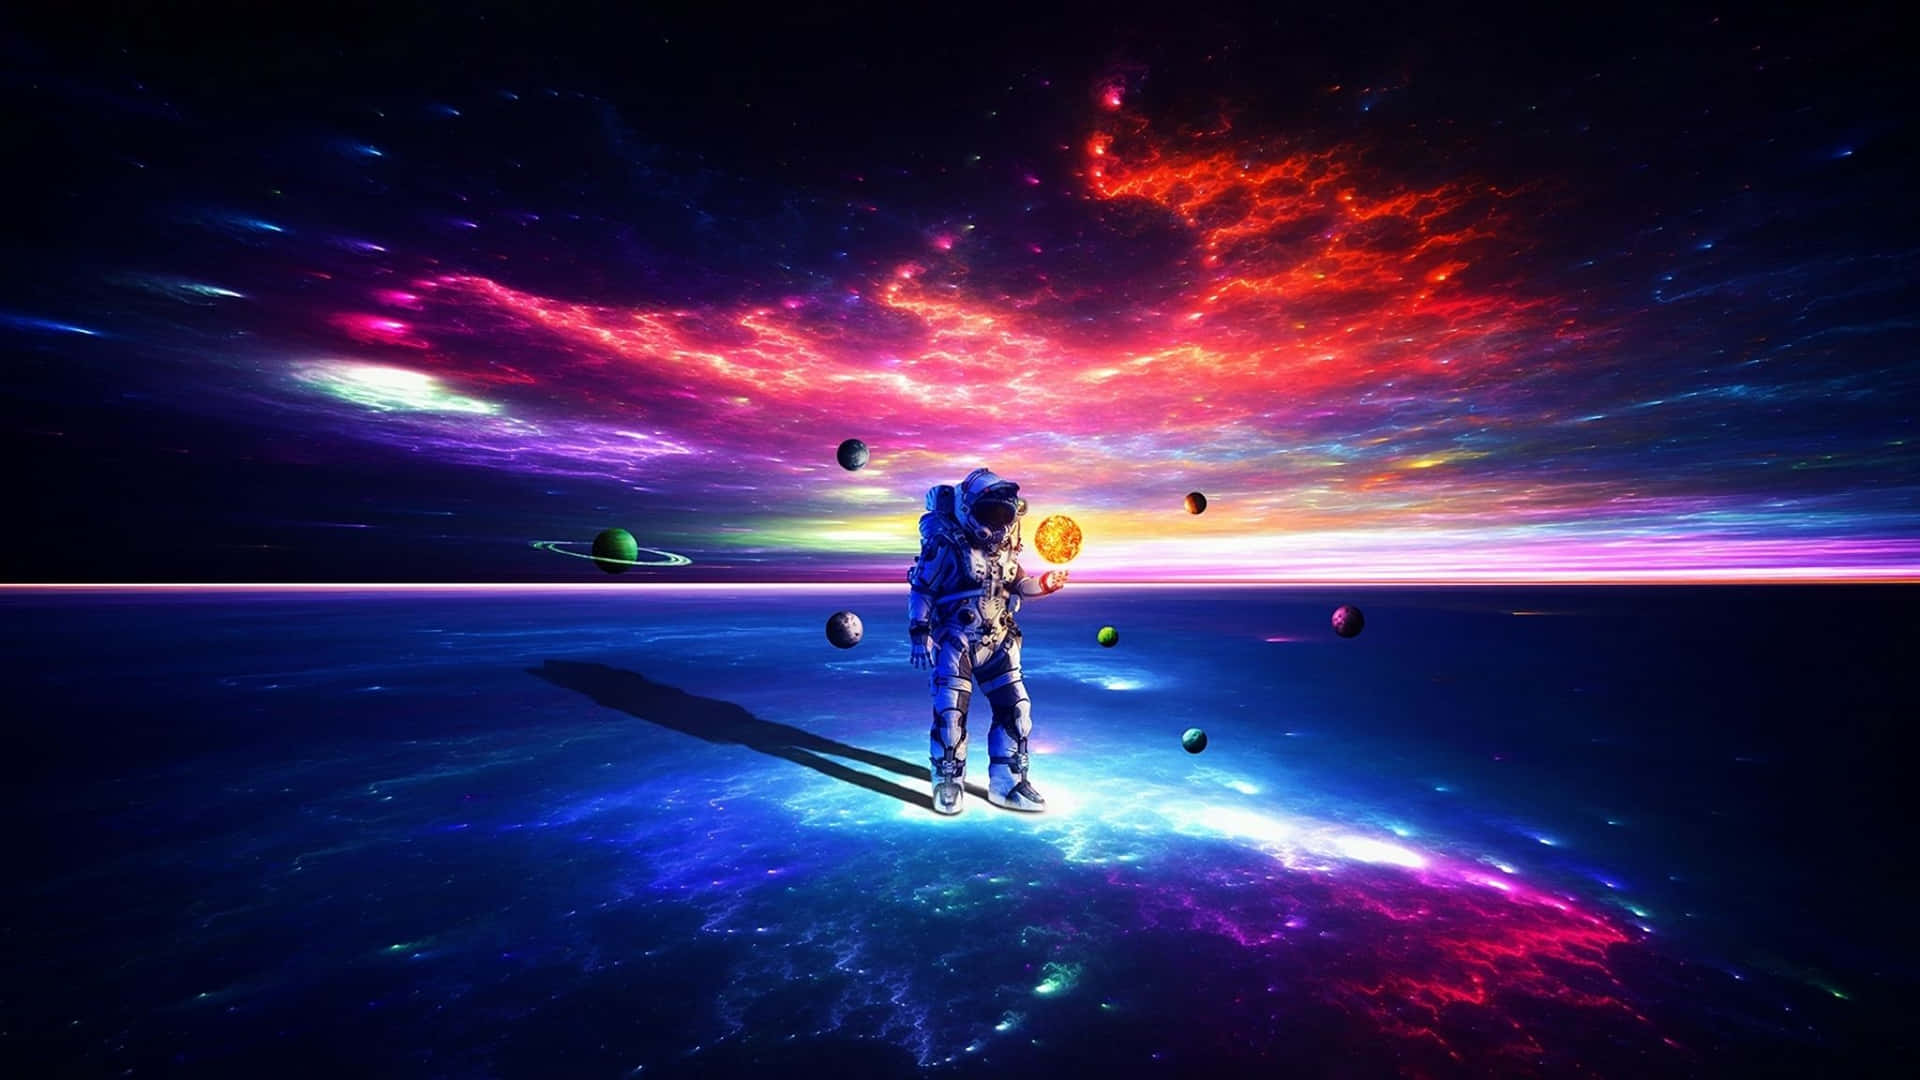 Walking Astronaut 2048x1152 Pixel Background